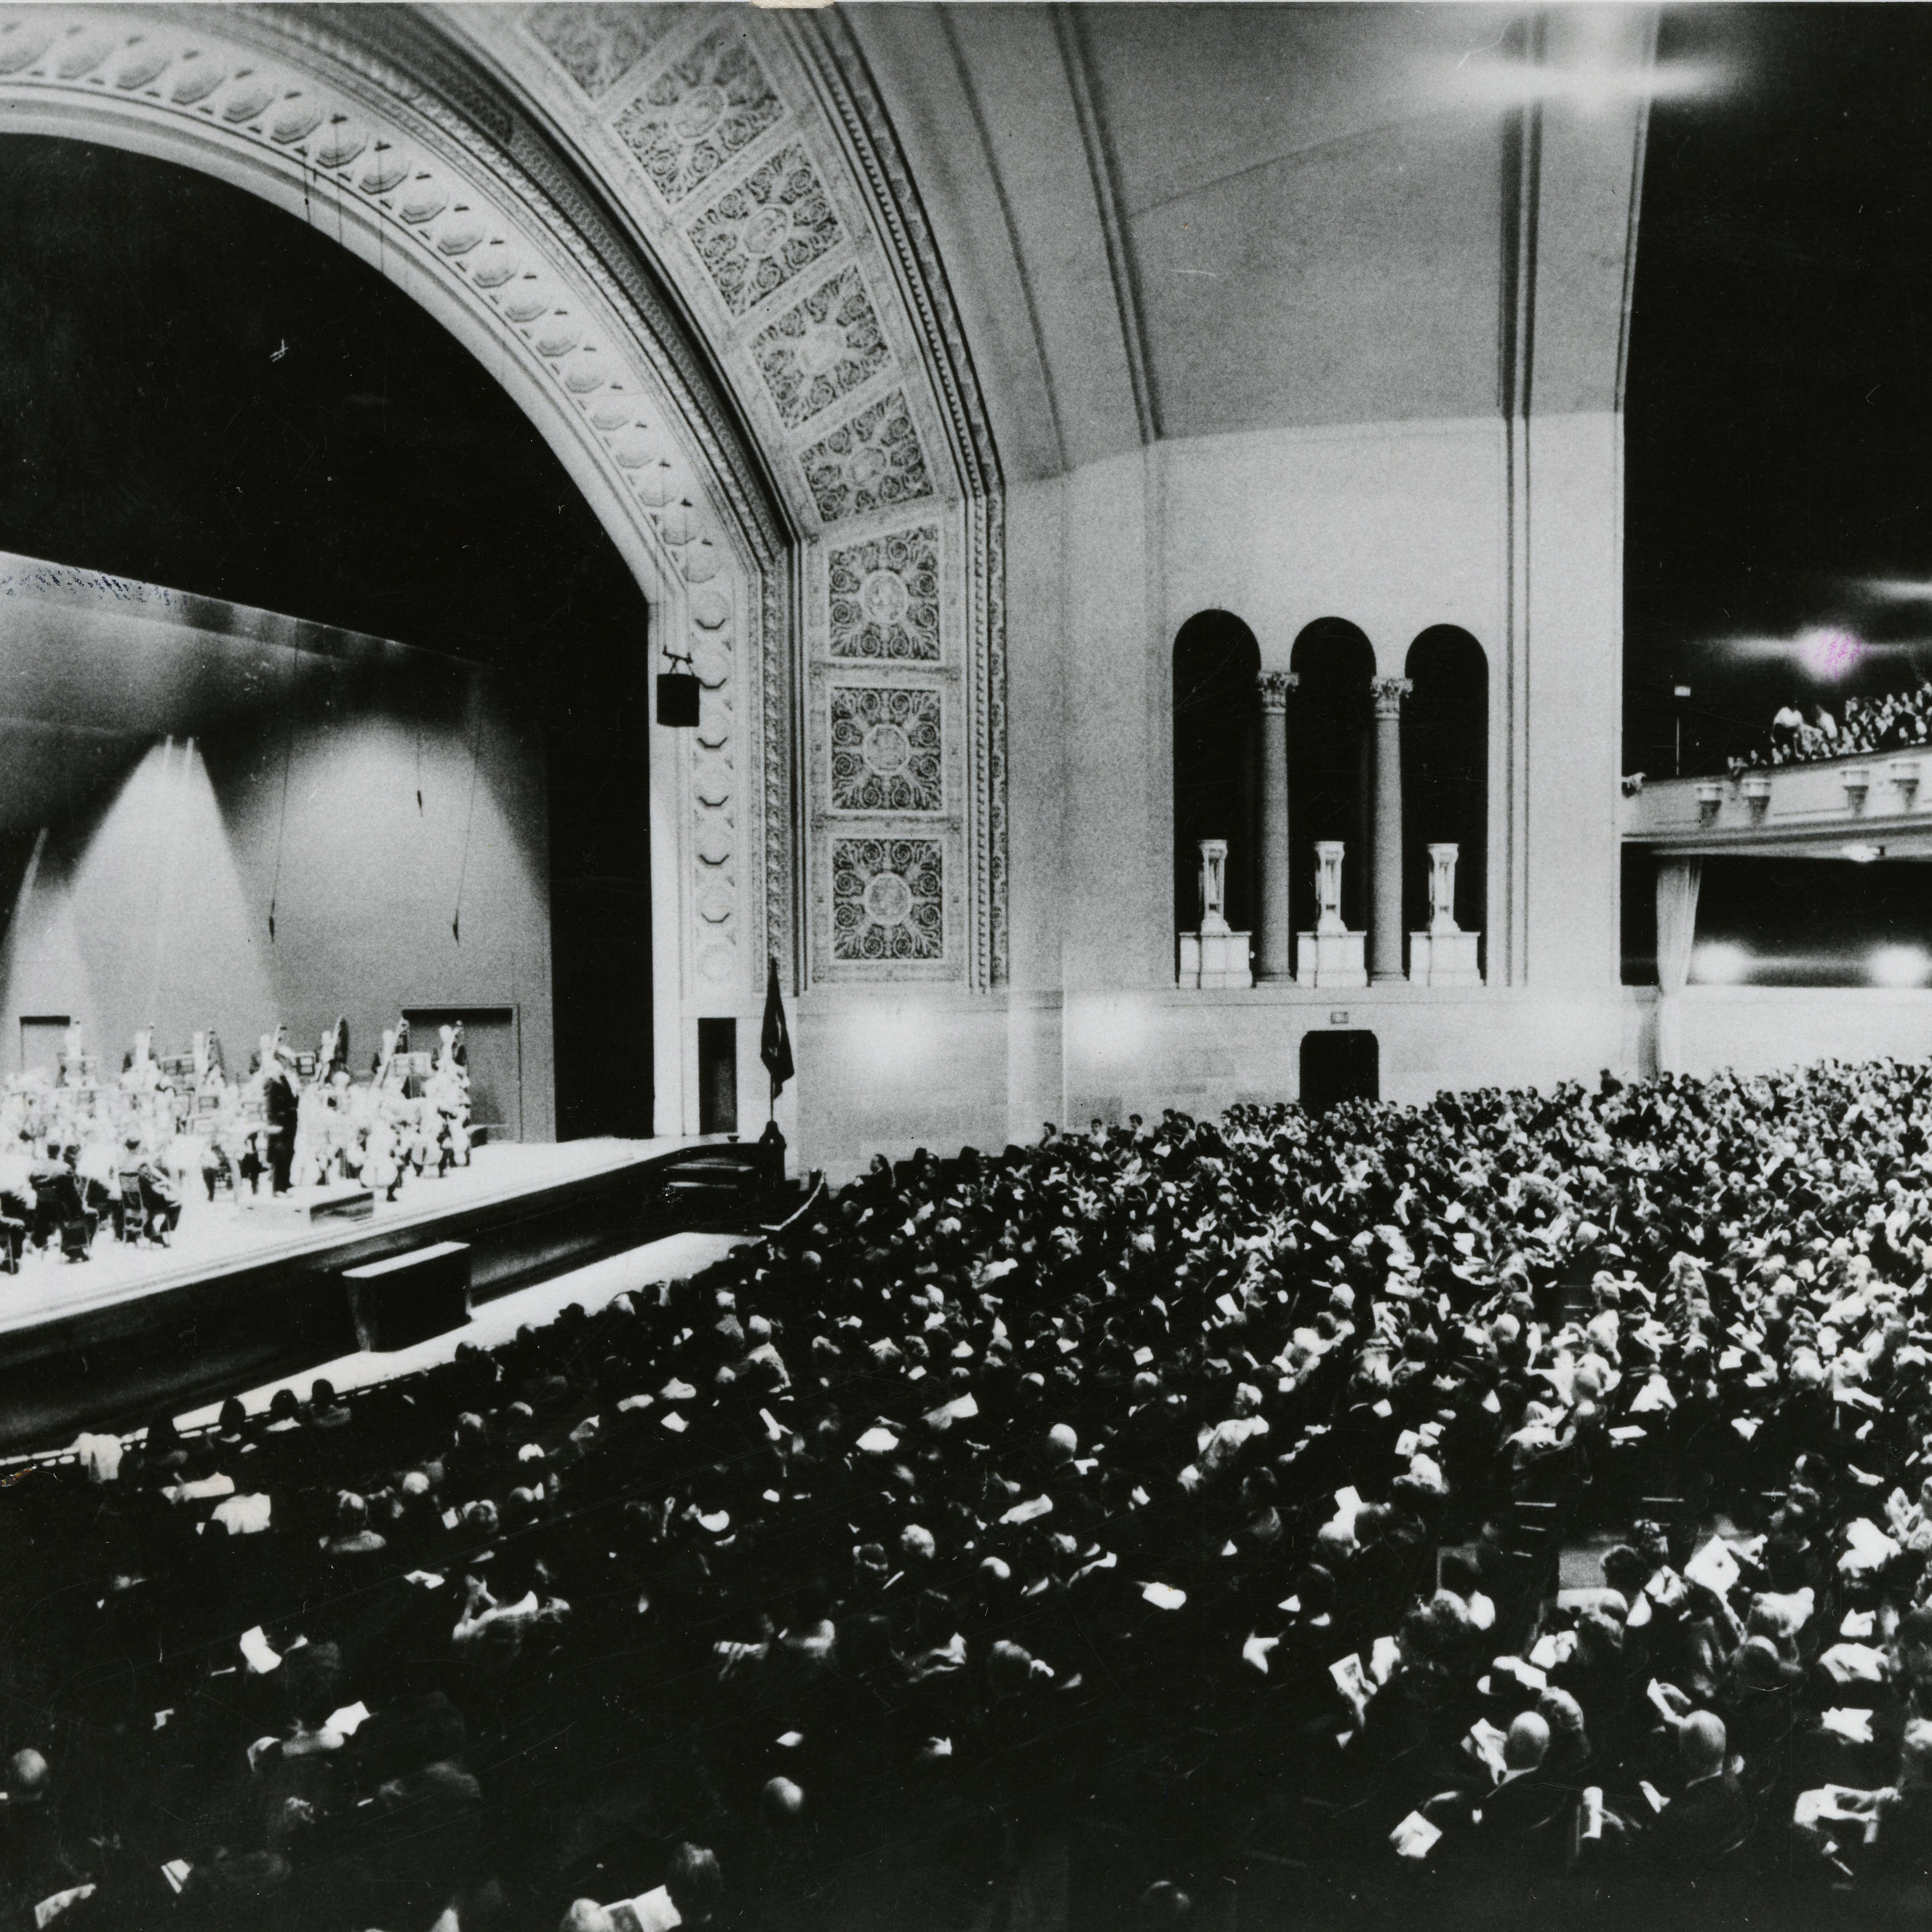 Northrop Transformed photo of a performance at Northrop Auditorium